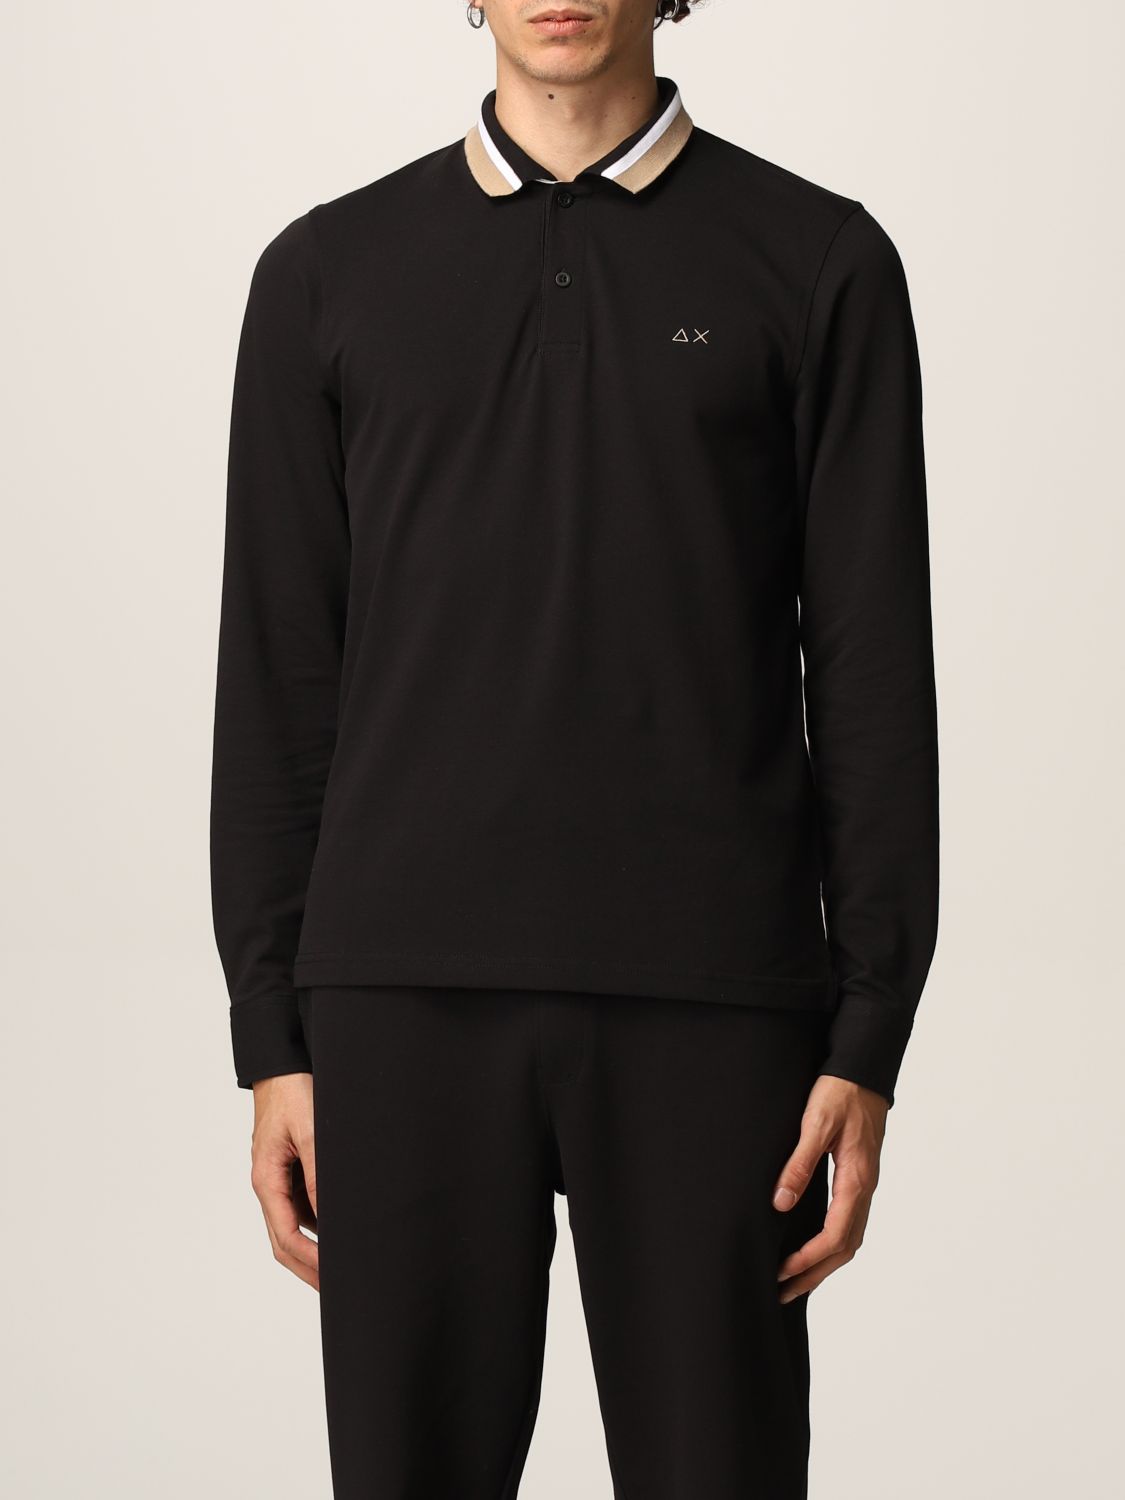 SUN 68: polo shirt for man - Black | Sun 68 polo shirt A41105 online on ...